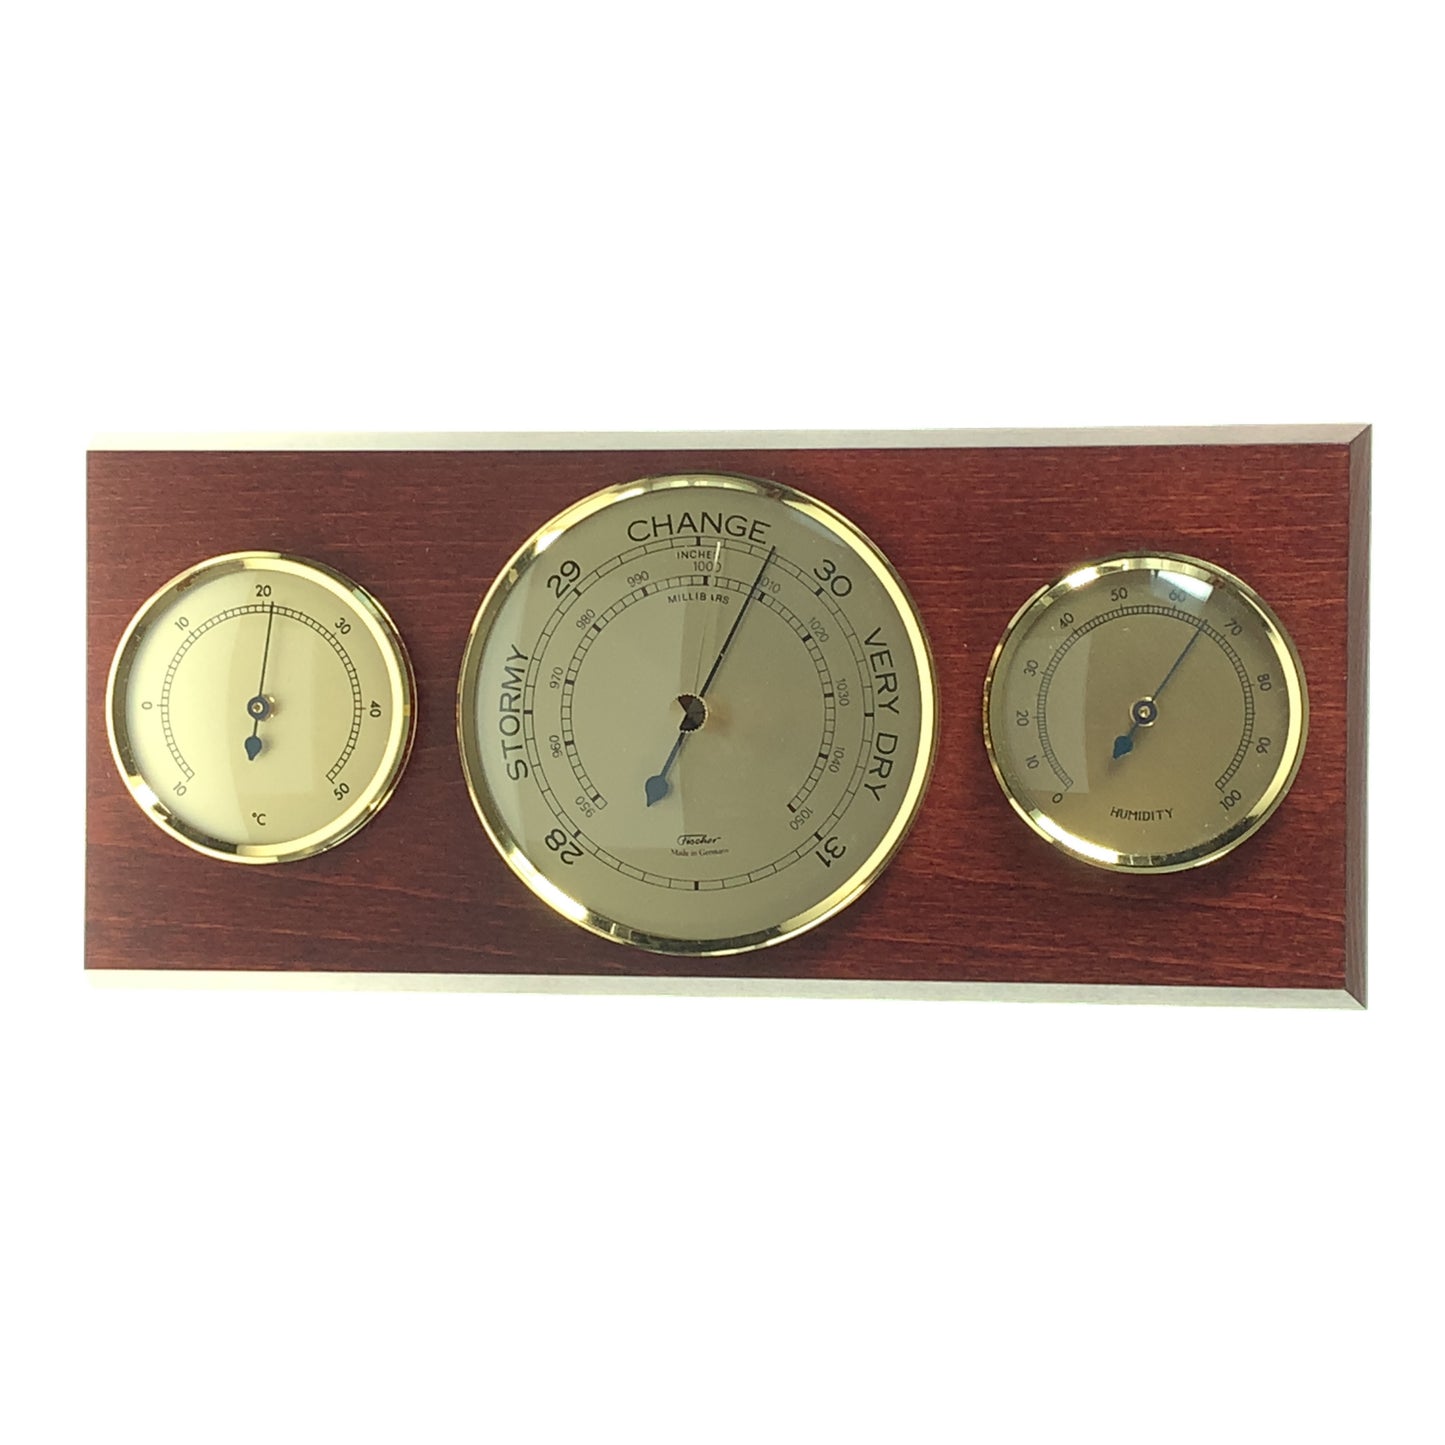 Fischer Thermometer, Hygrometer & Barometer